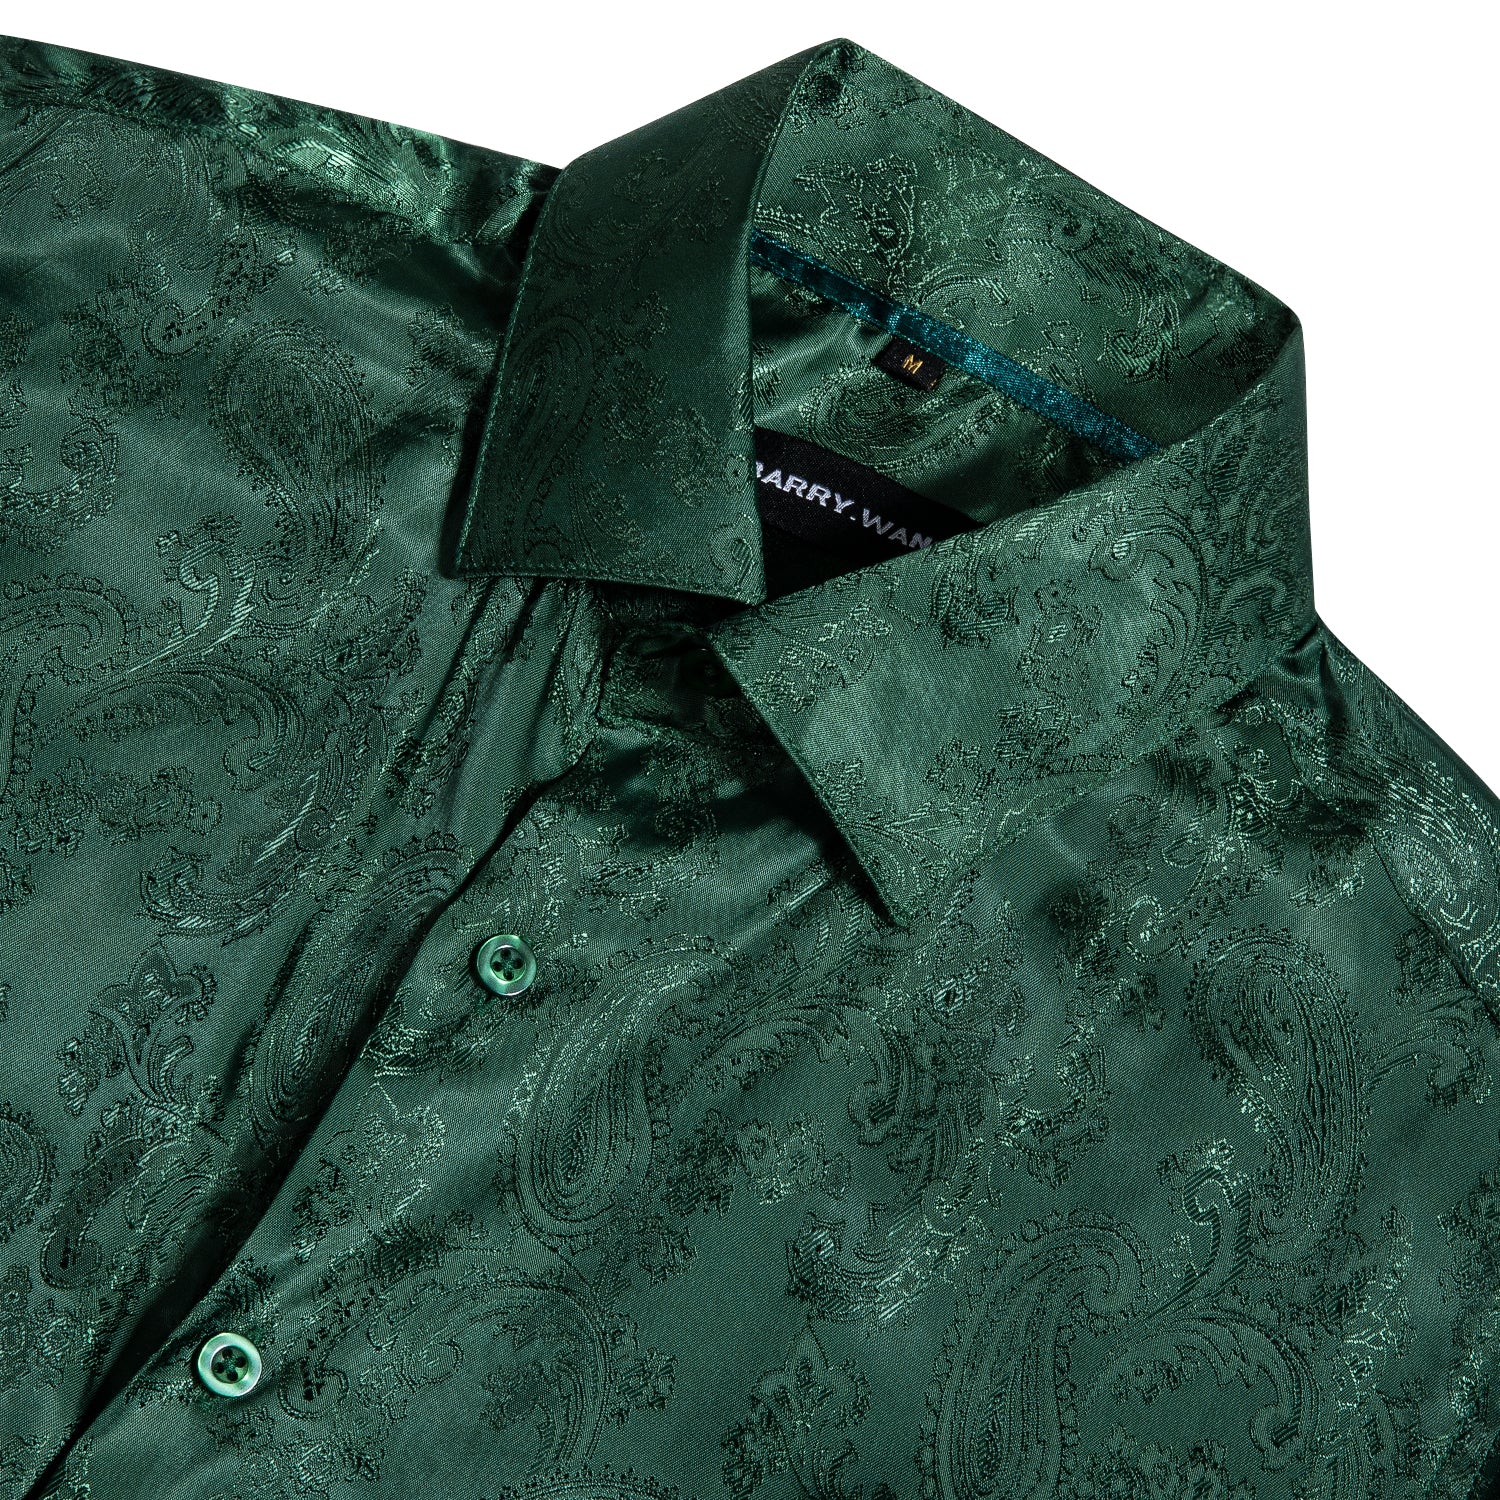 Barry.wang Luxury Dark Green Paisley Long Sleeves Silk Shirt